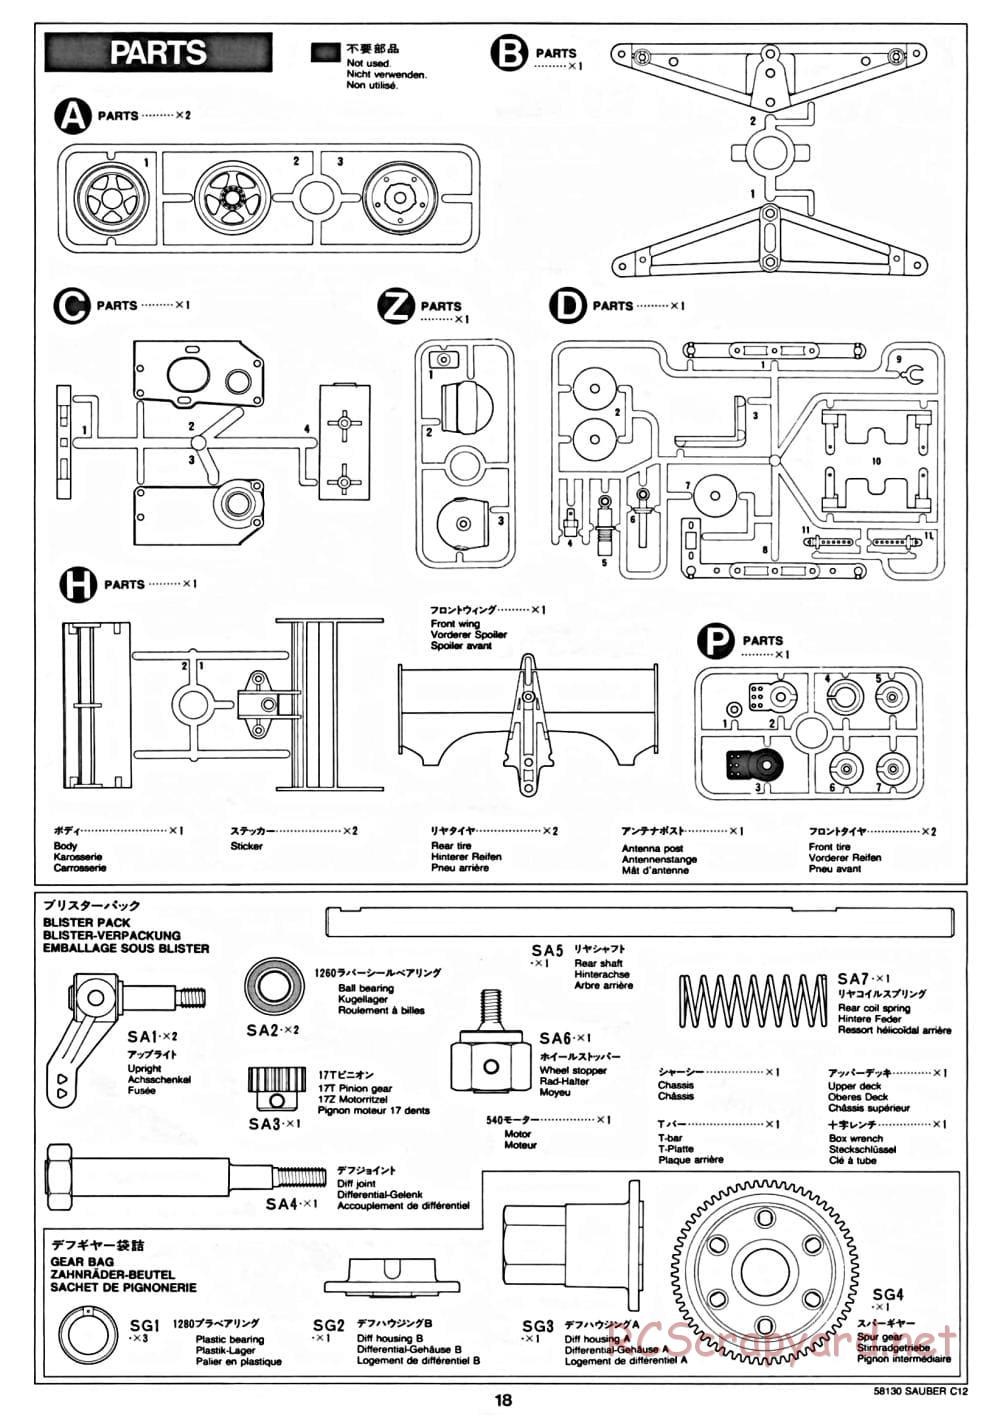 Tamiya - Sauber C12 - F103 Chassis - Manual - Page 18